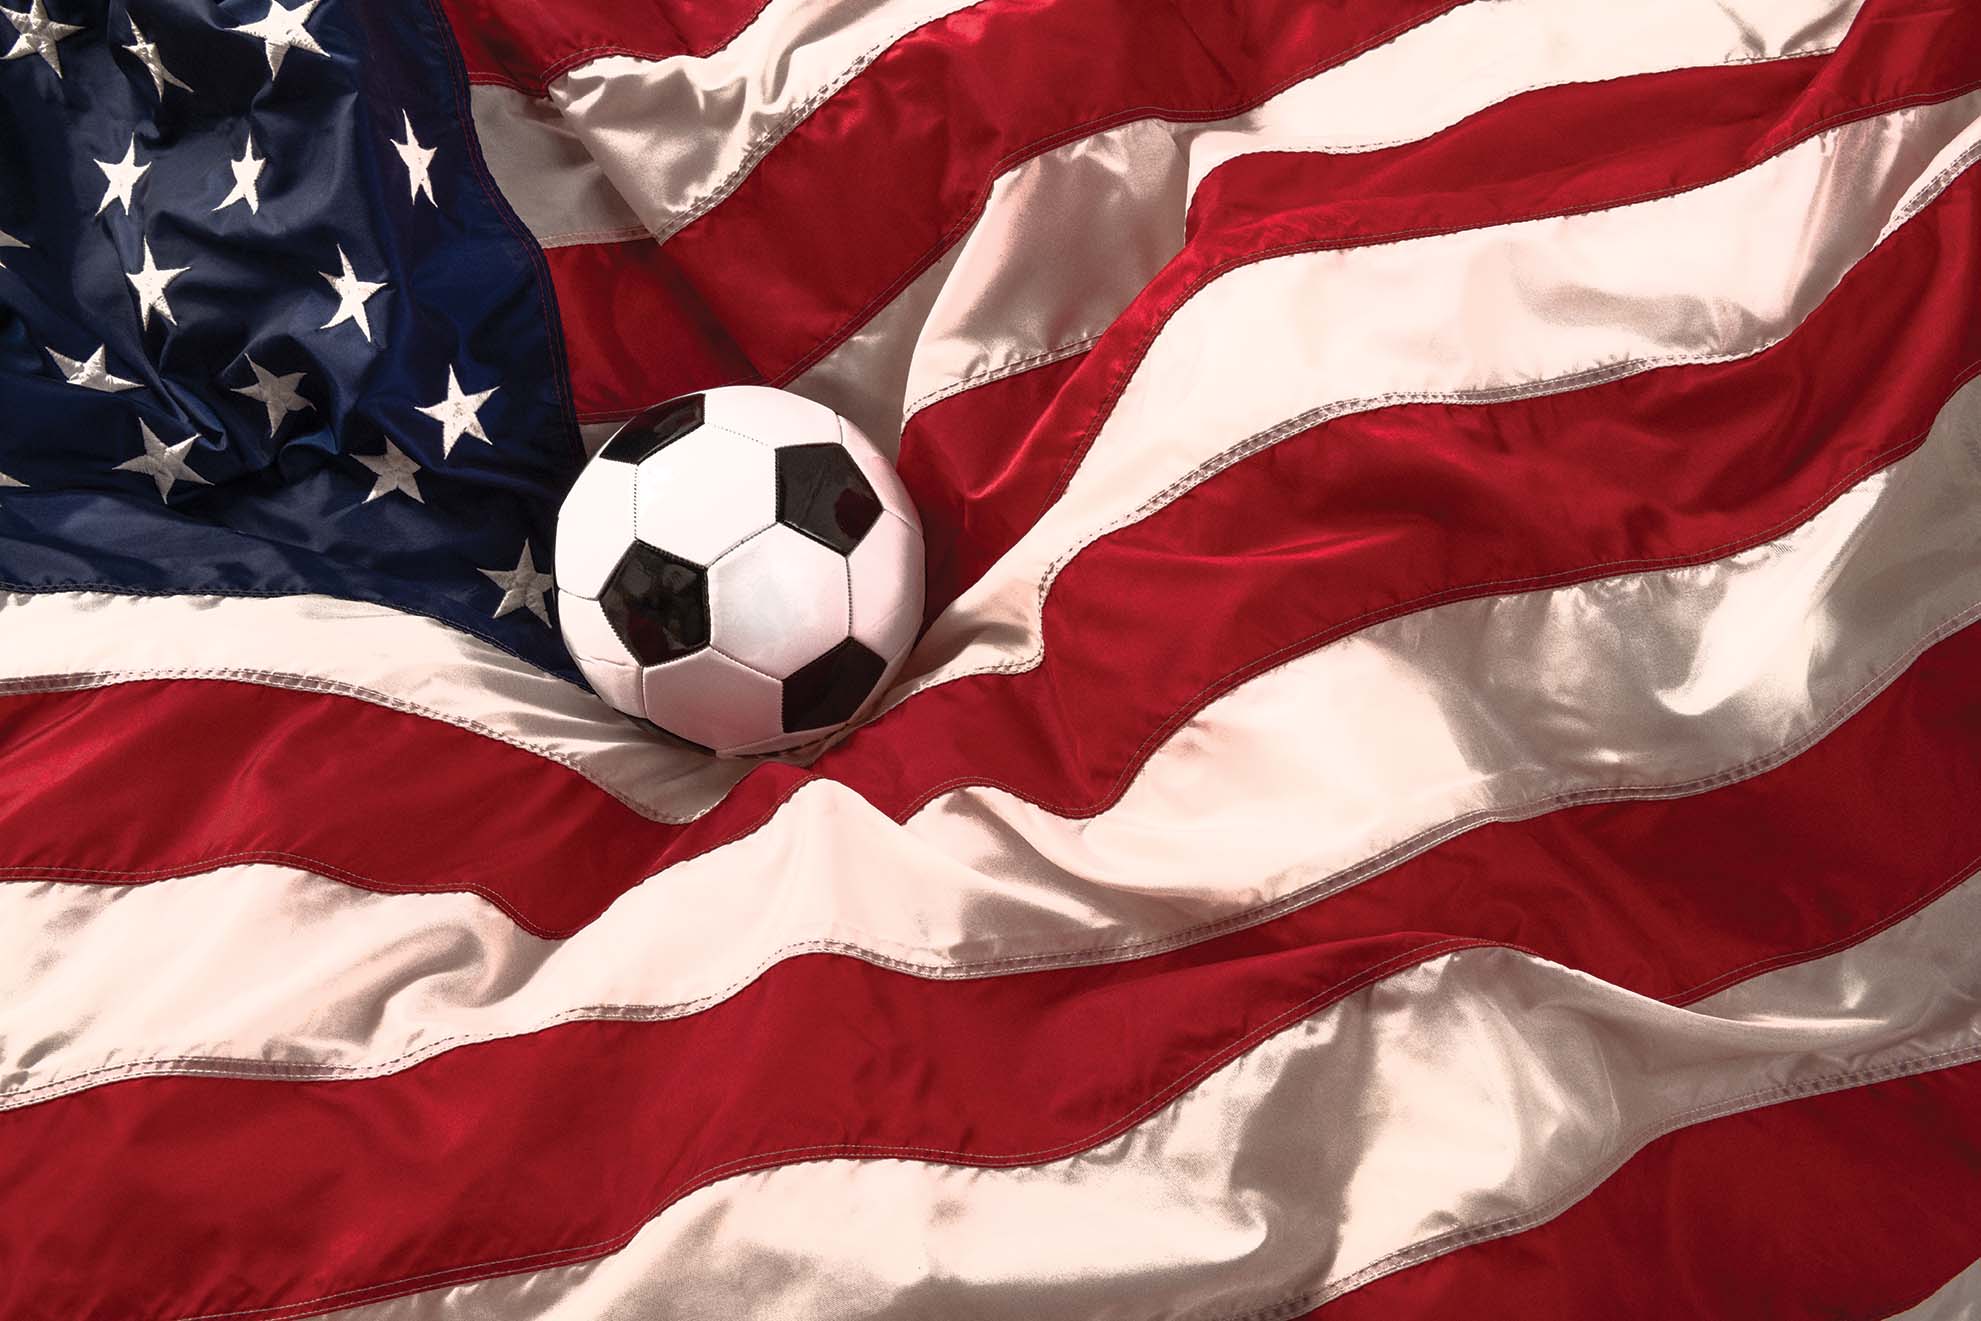 Soccer ball resting in American flag